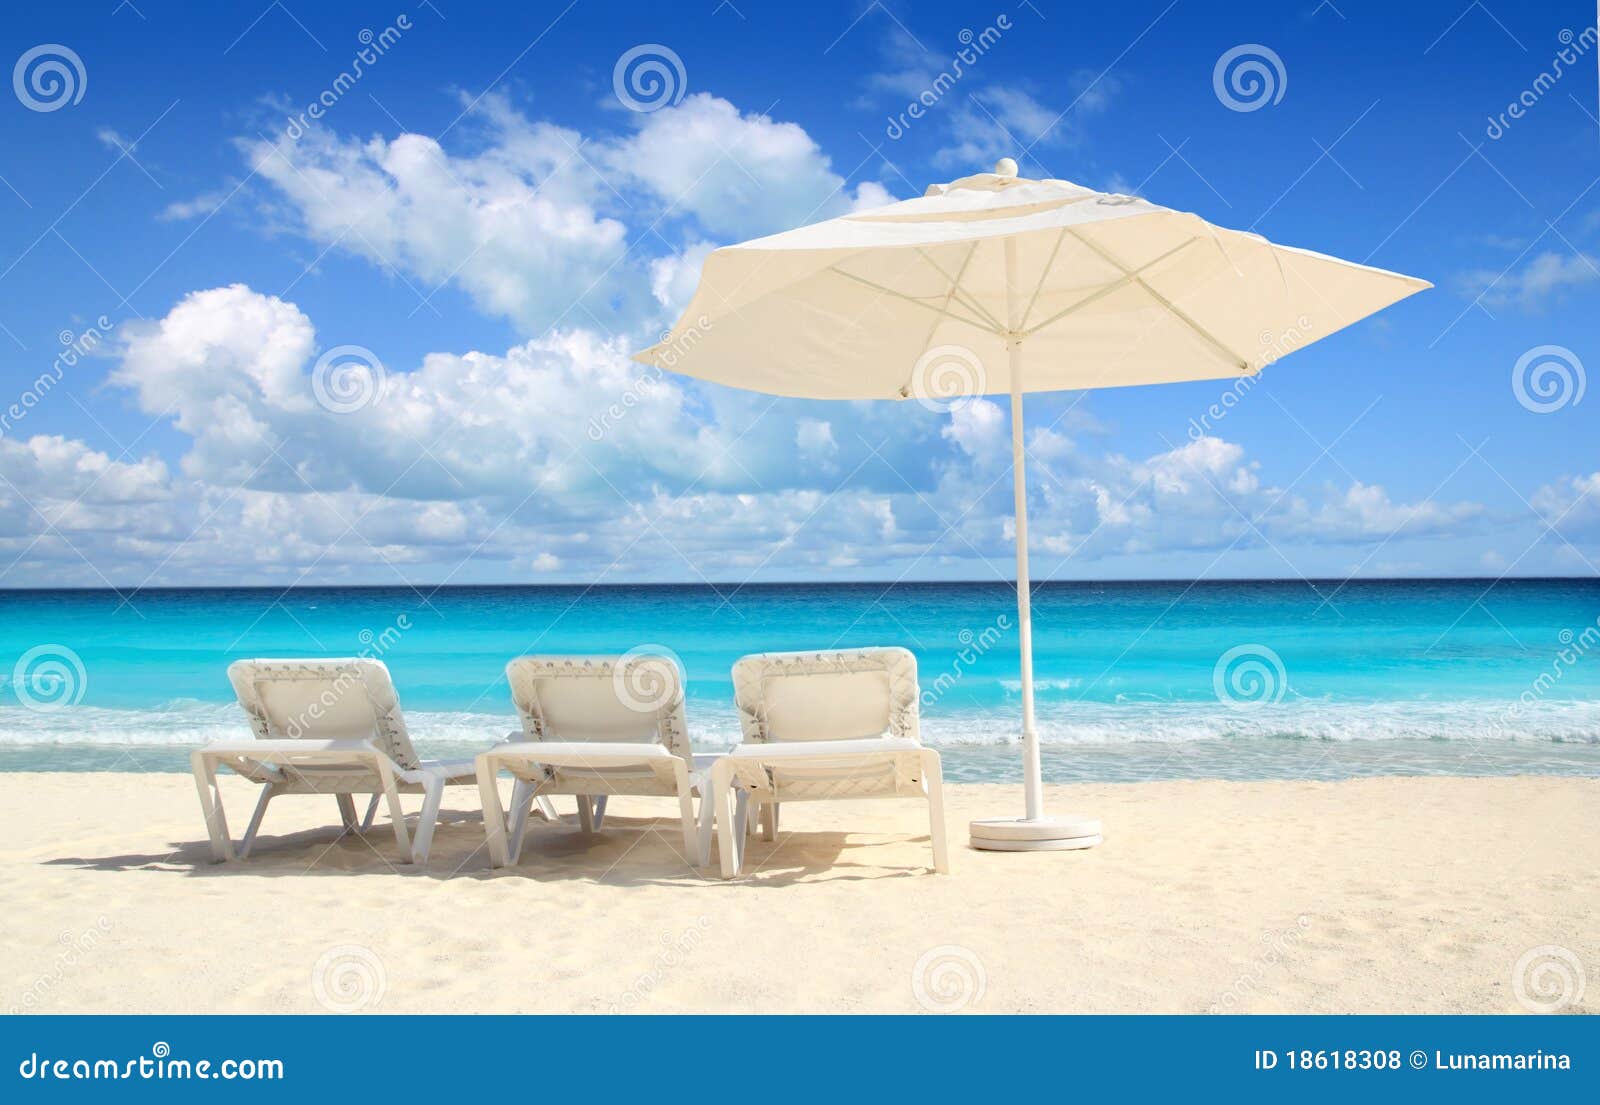 caribbean beach parasol white umbrella hammocks